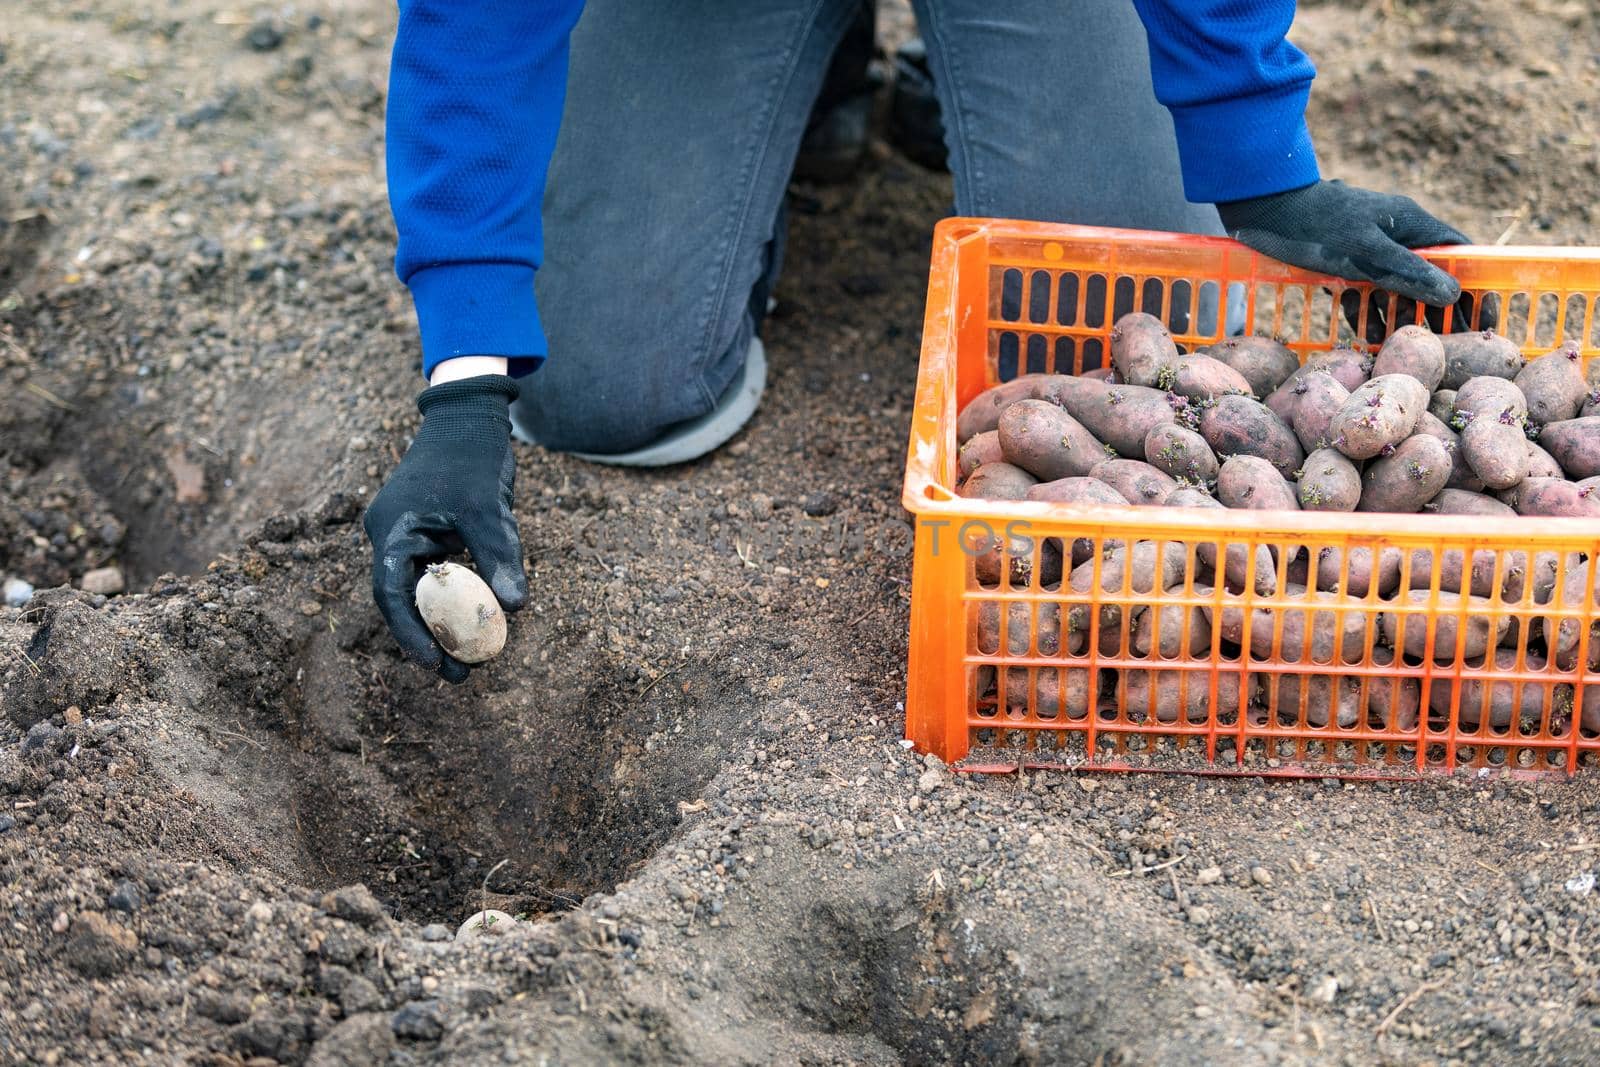 Process of seeding potato tubers into the ground